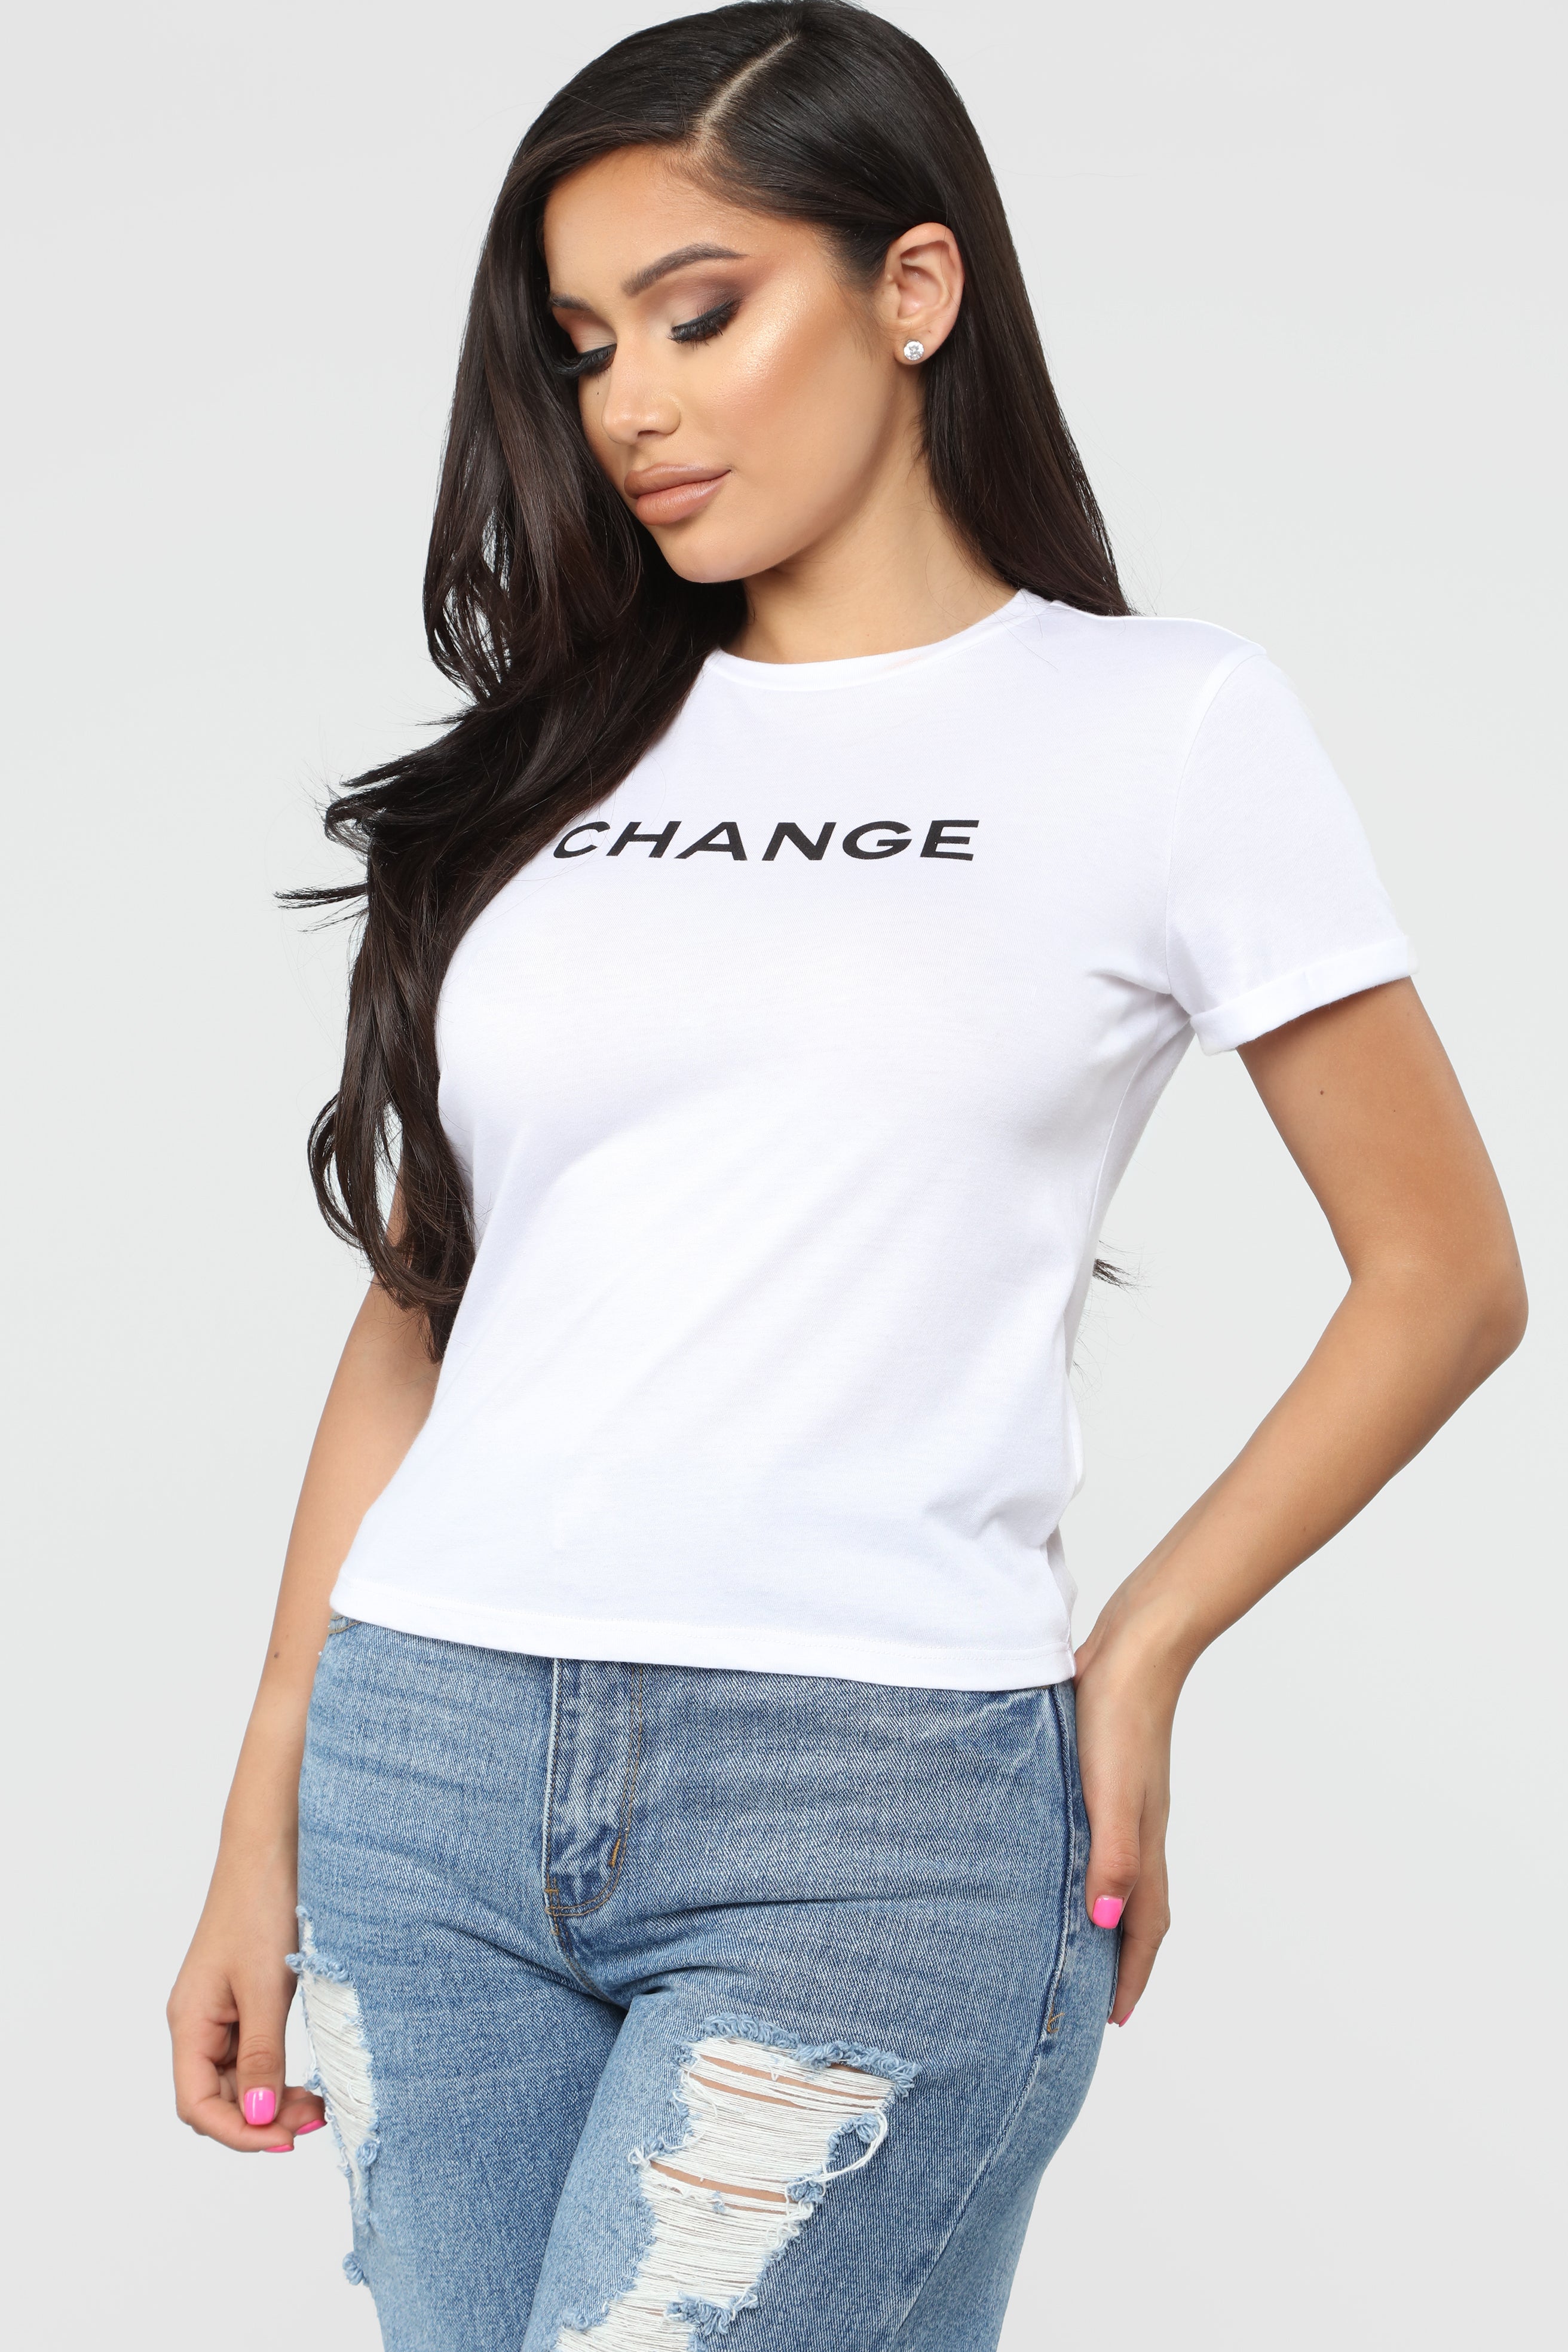 Be The Change Top - White/Black – Fashion Nova